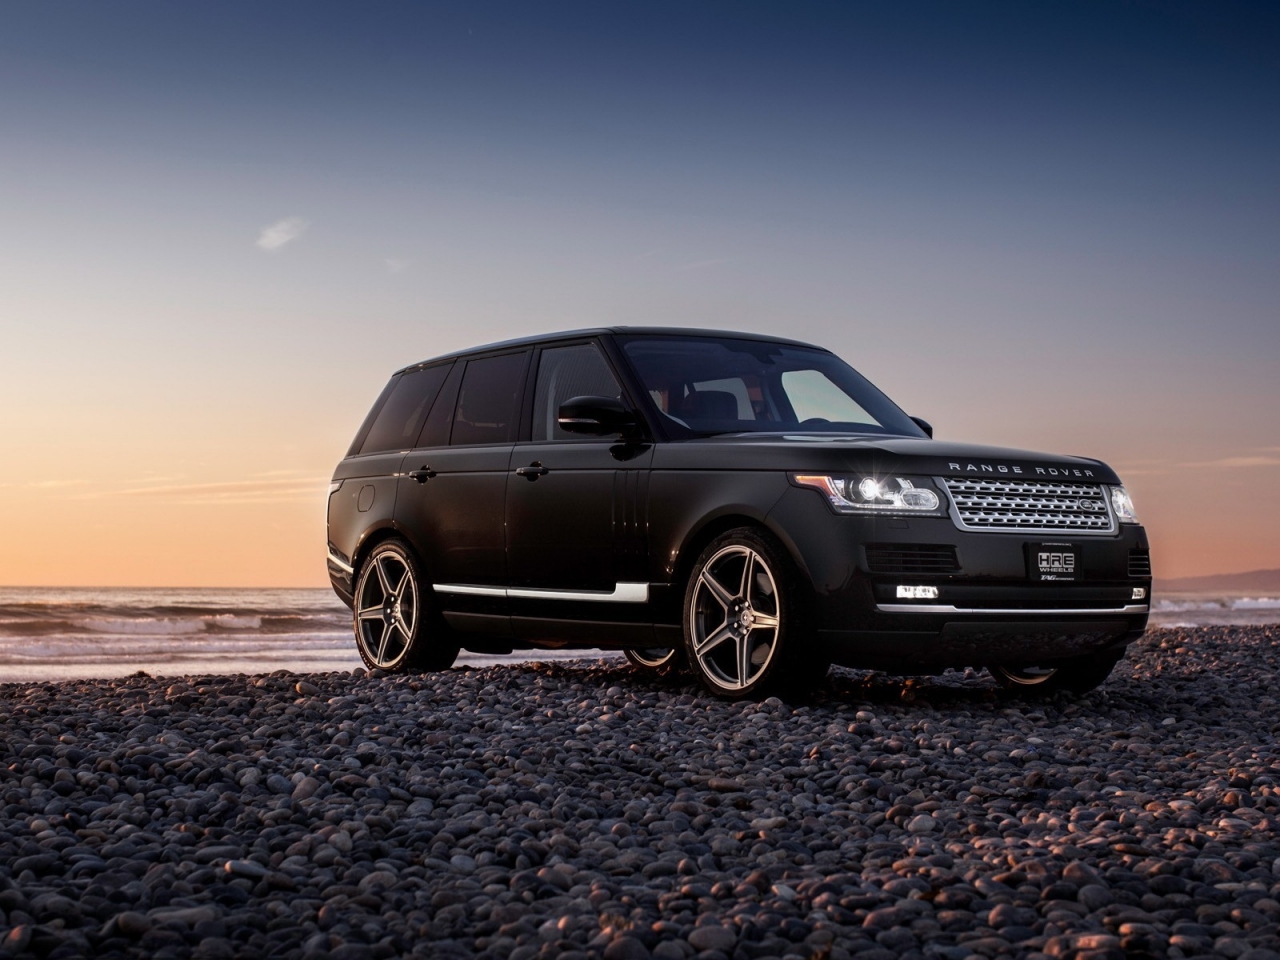 New Black Range Rover for 1280 x 960 resolution